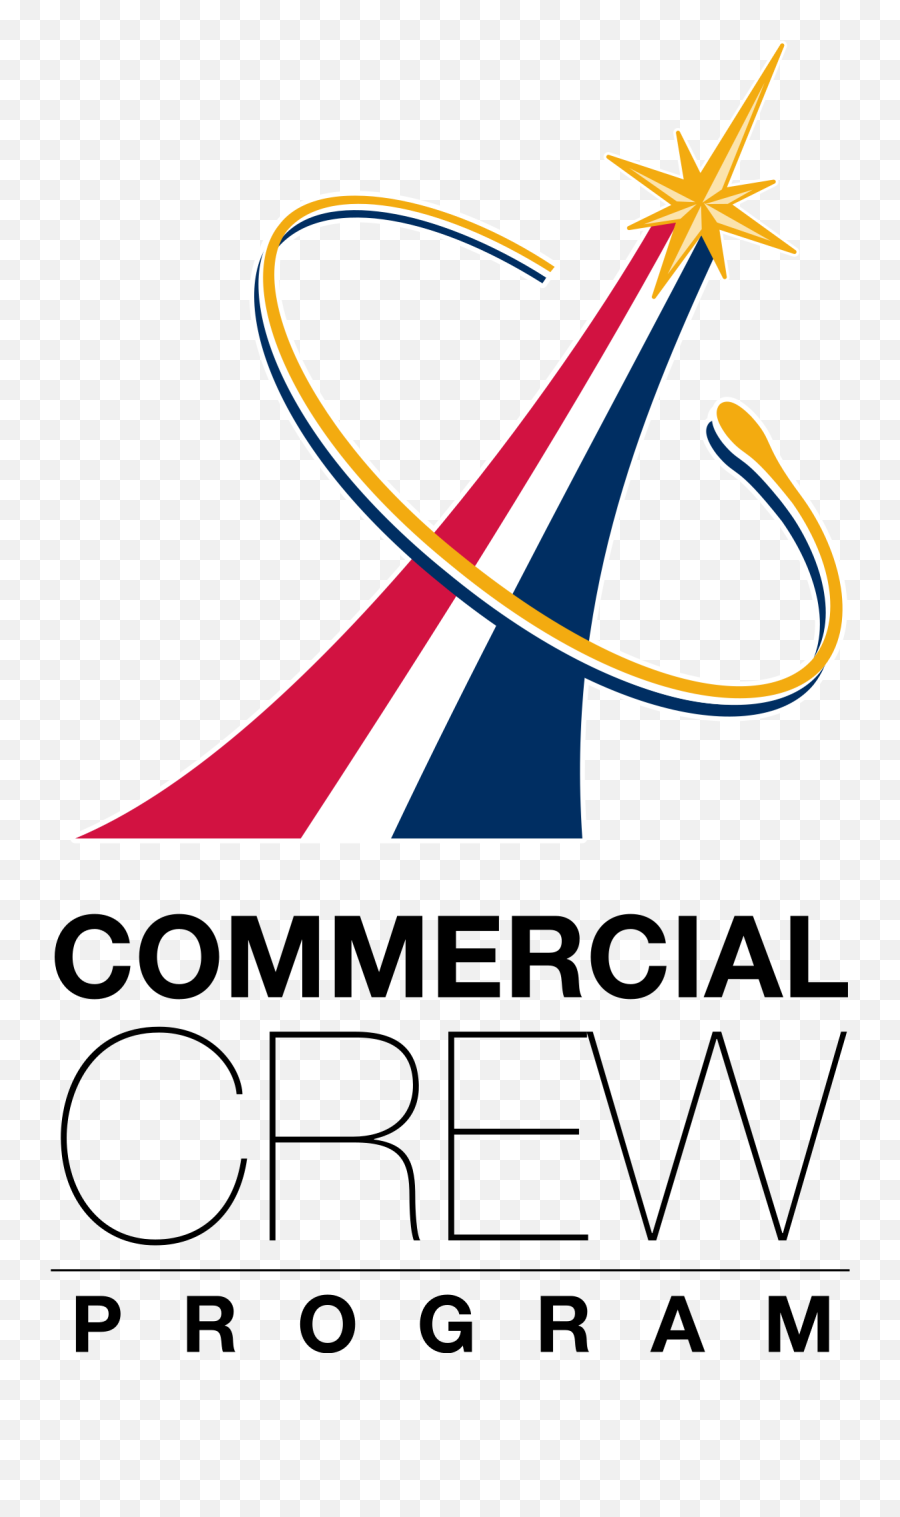 Commercial Crew Program - Wikipedia Commercial Crew Development Png,Nasa Logo Png